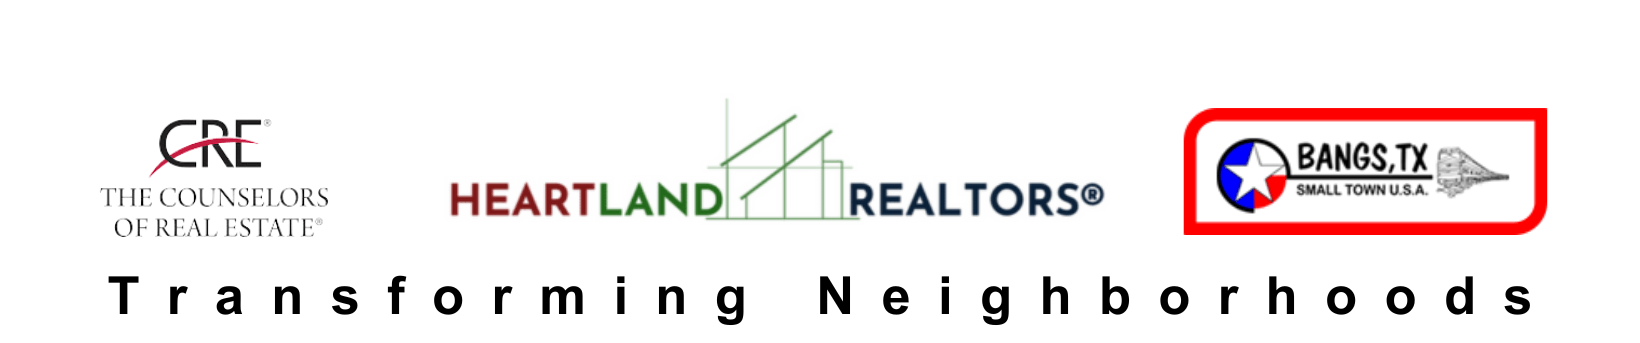 Counselors of Real Estate Logo, Heartland Realtors Logo, City of Bangs, Texas Logo, Transforming Neighborhoods